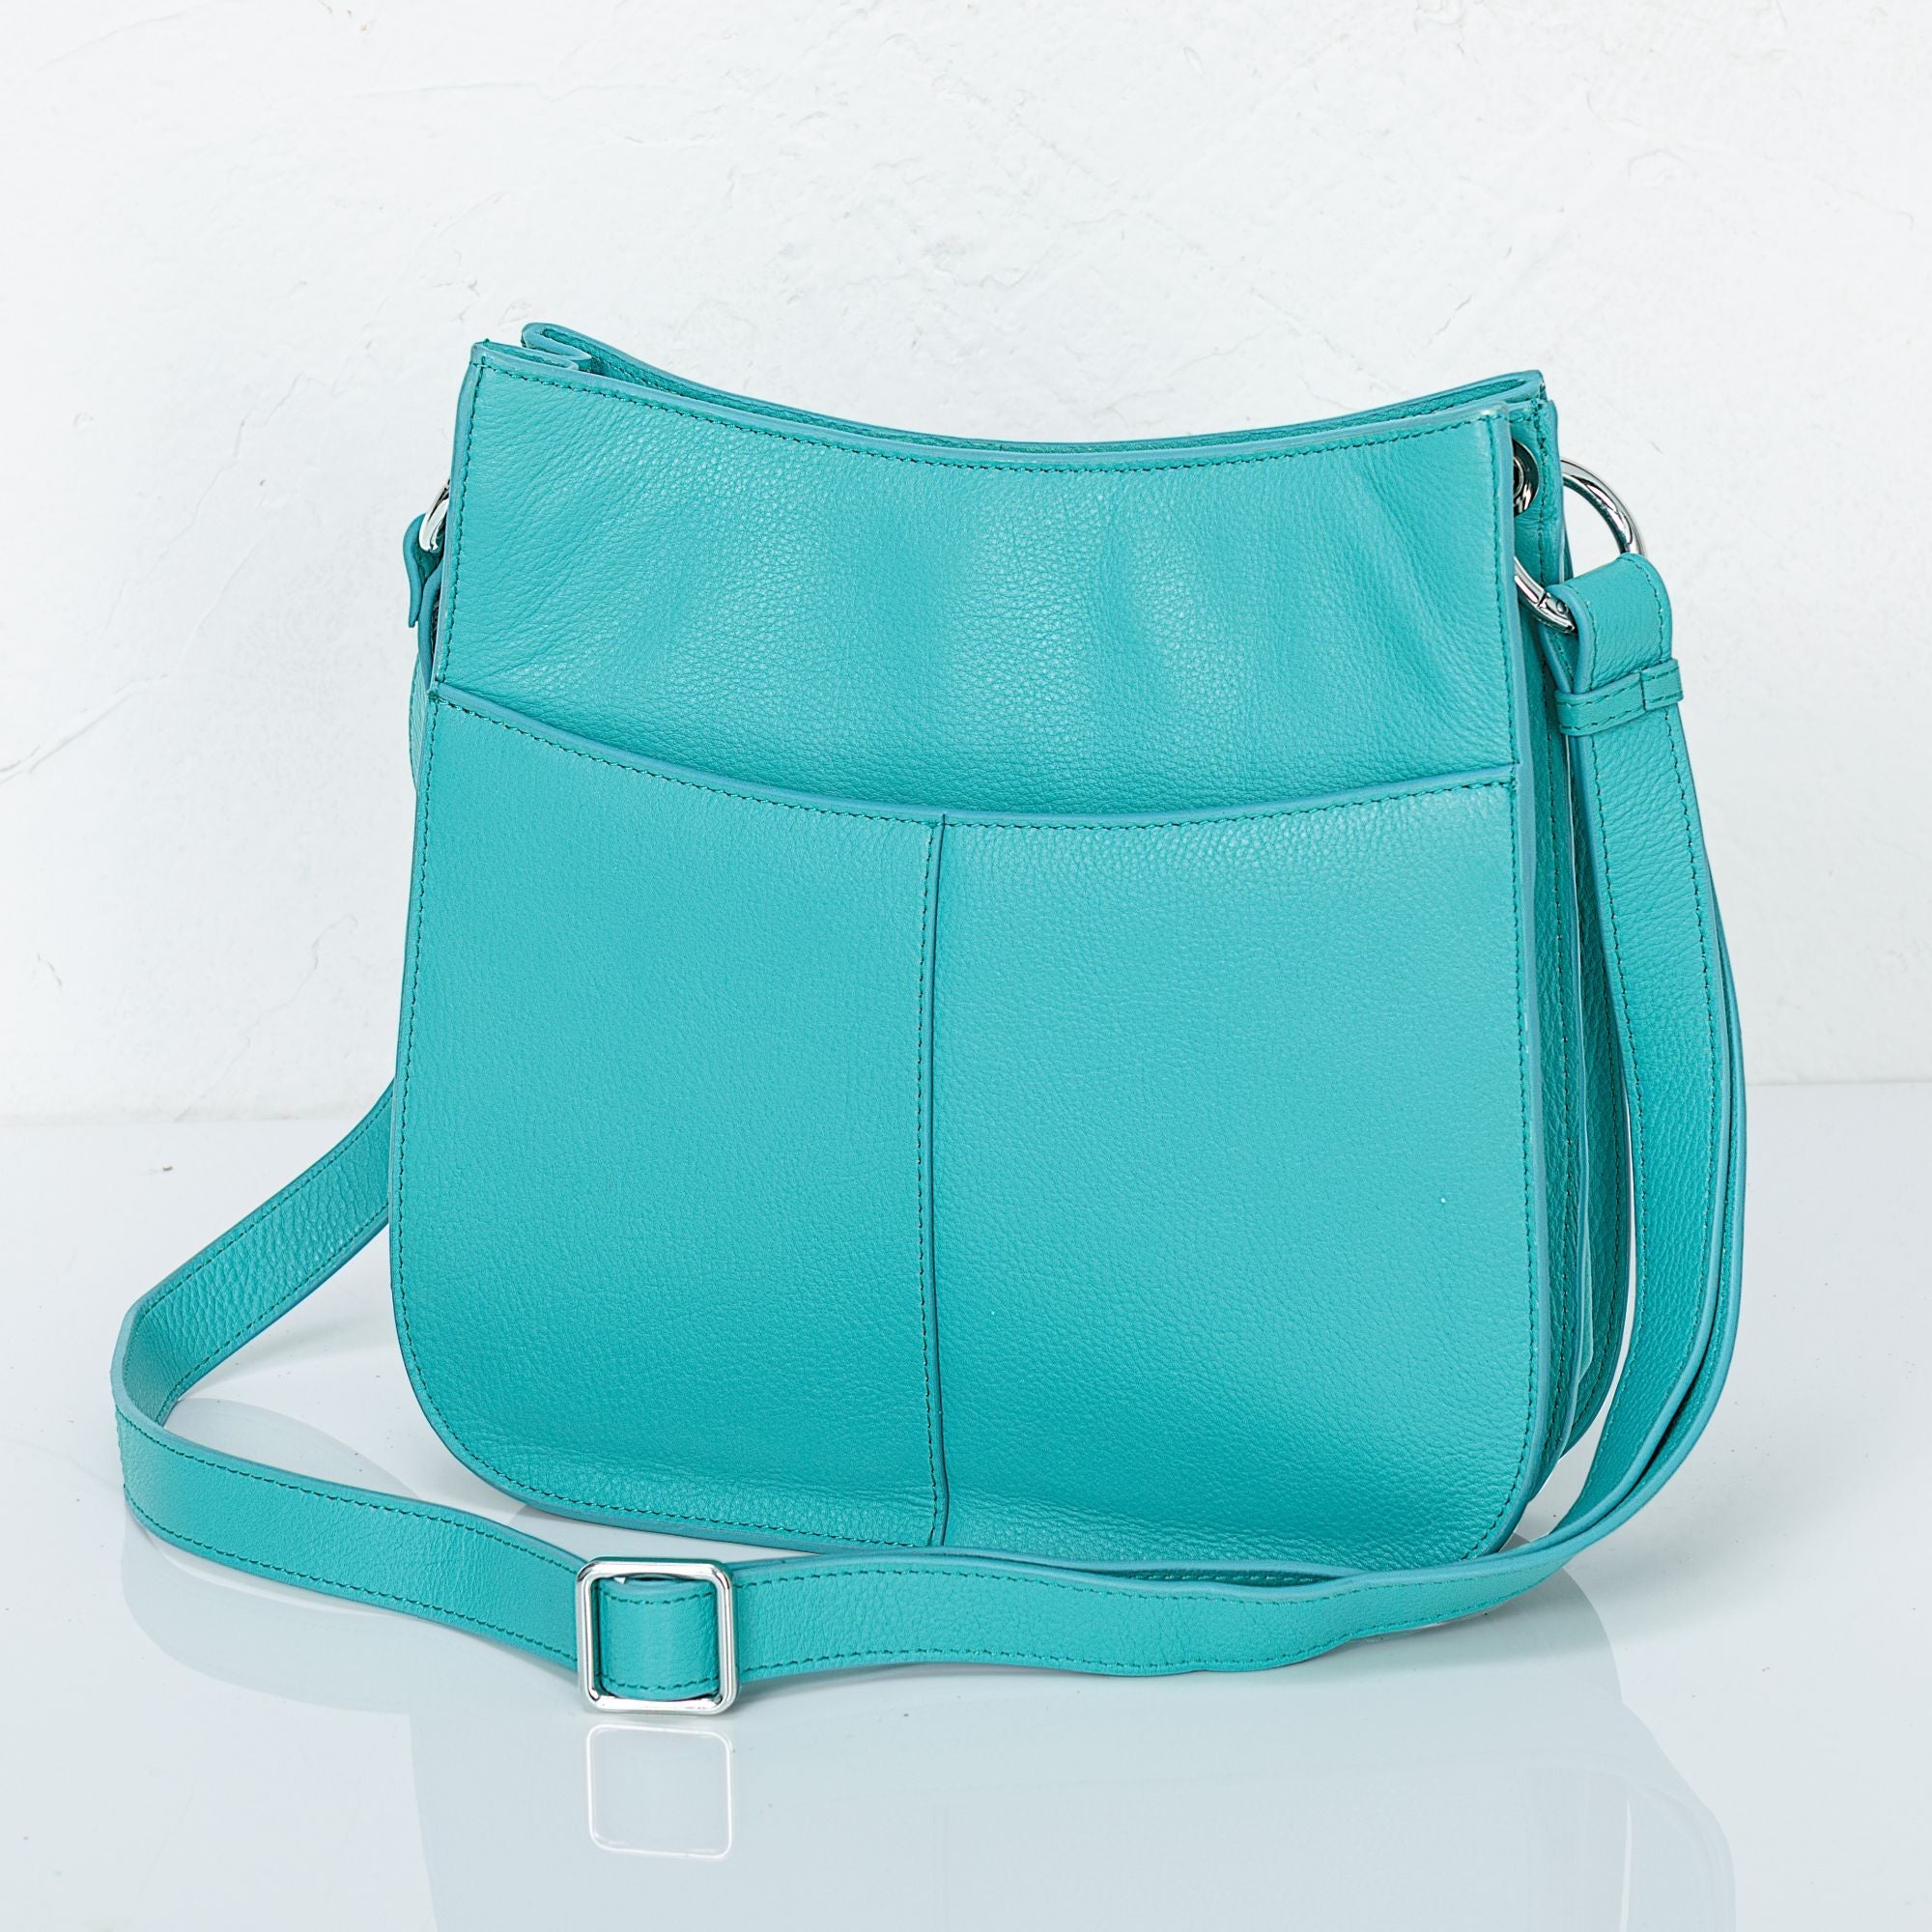 Turquoise Leather Tasseled Crossbody Bag